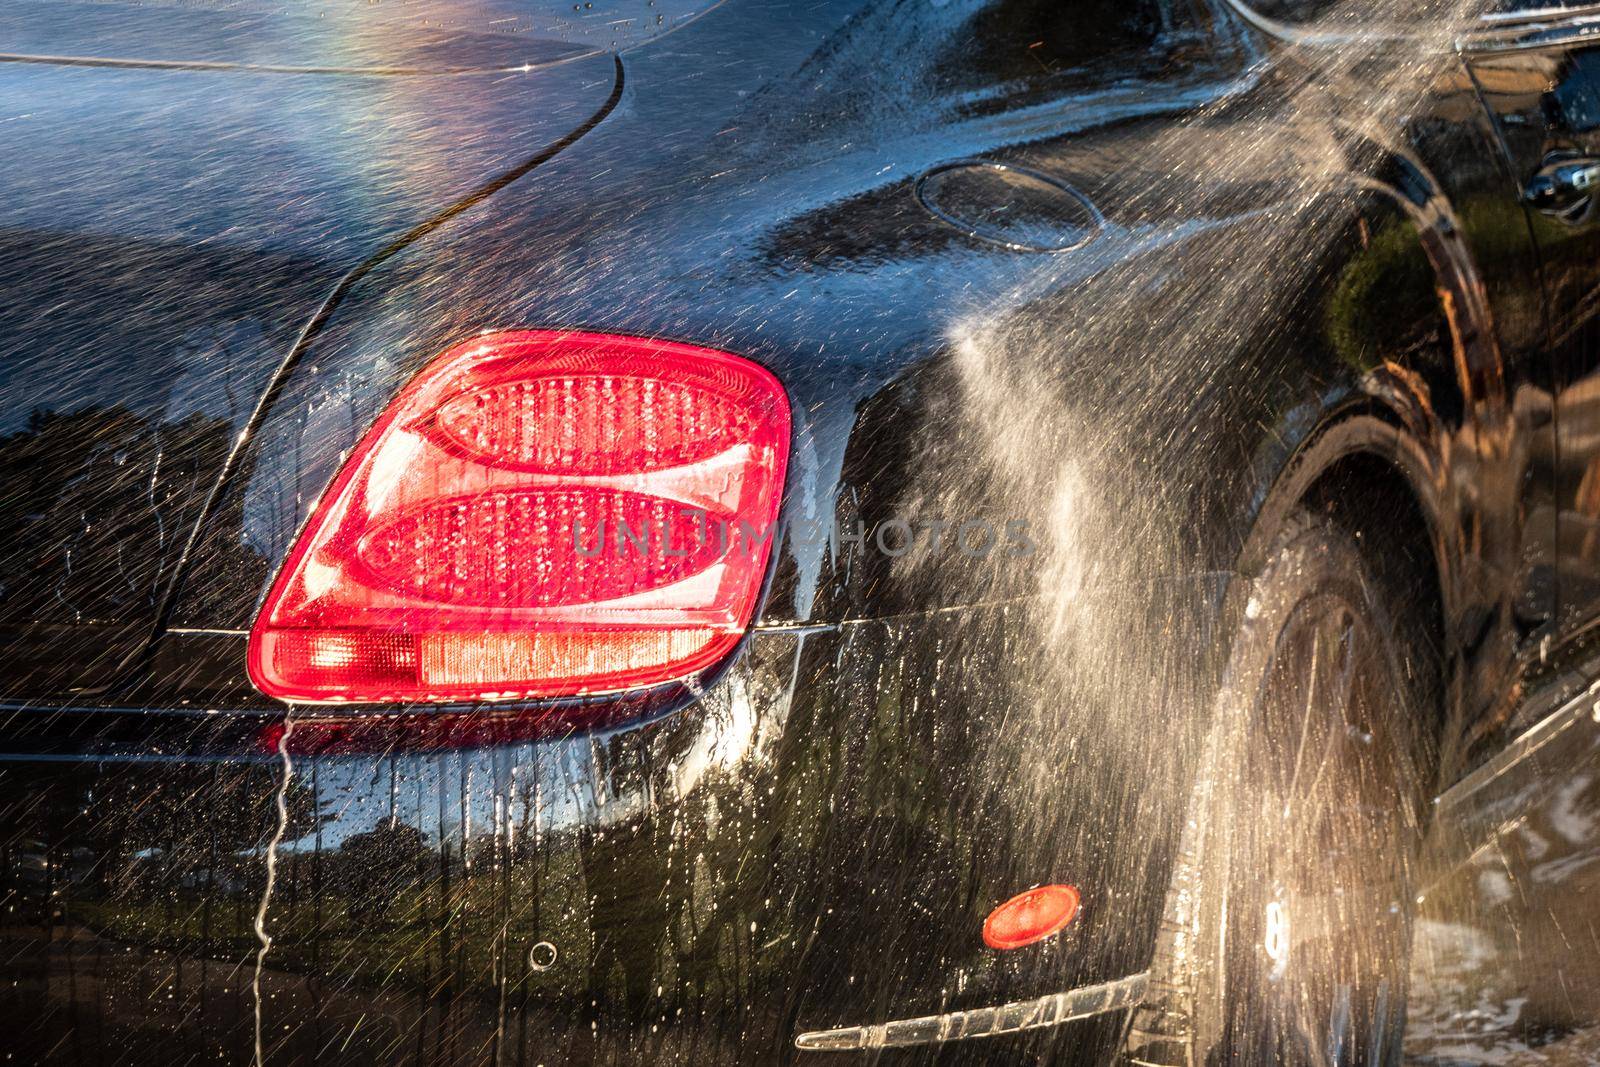 auto detailer washing luxury high end car